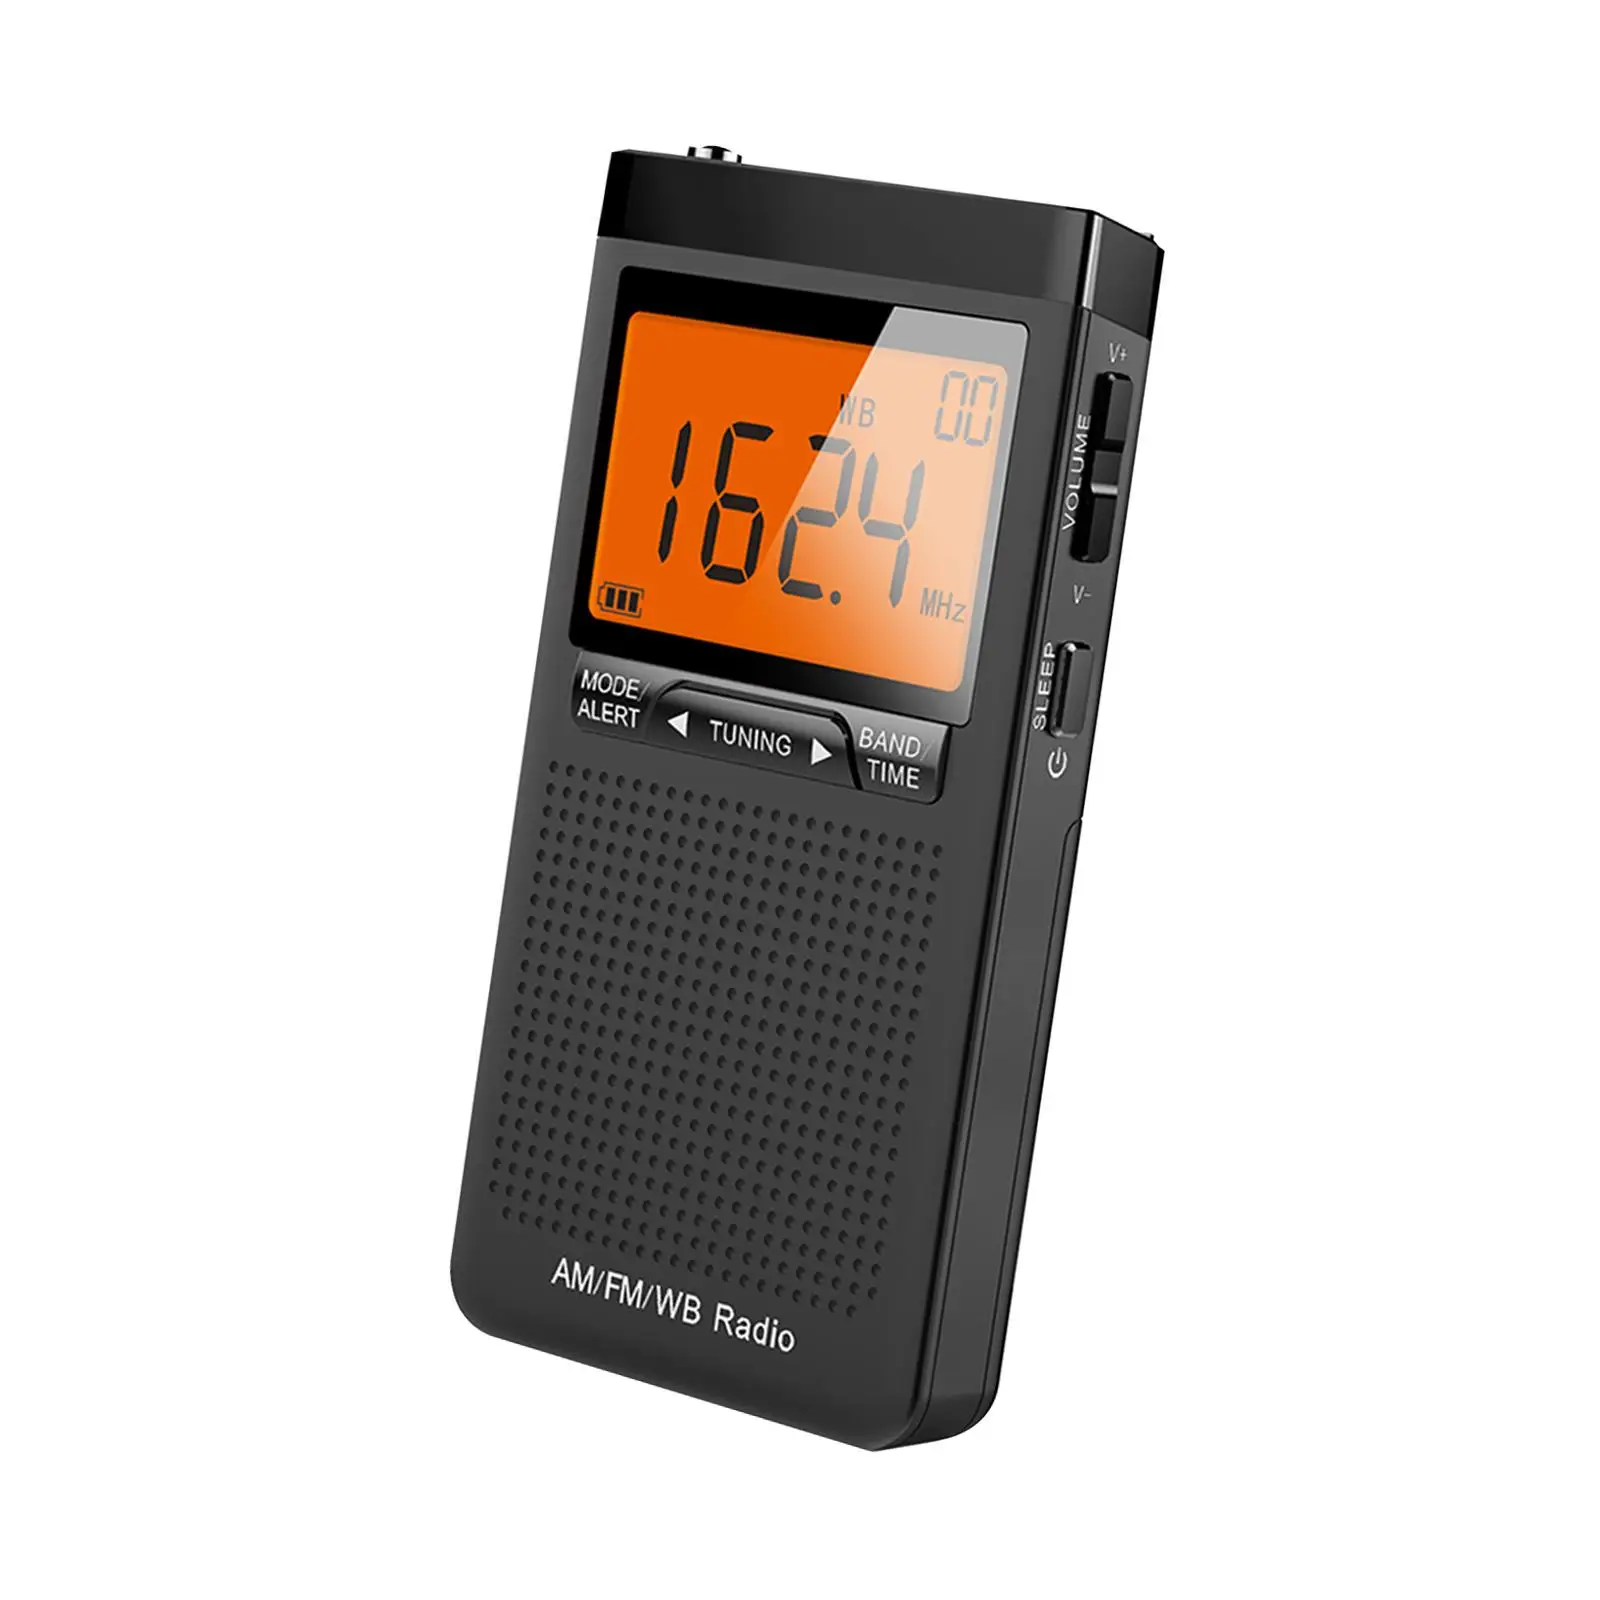 Portable Radio AM FM 3.5mm Headphone Jack Good Reception Mini Stereo Pocket Radio for Gym Jogging Indoor Outdoor Camping Walking